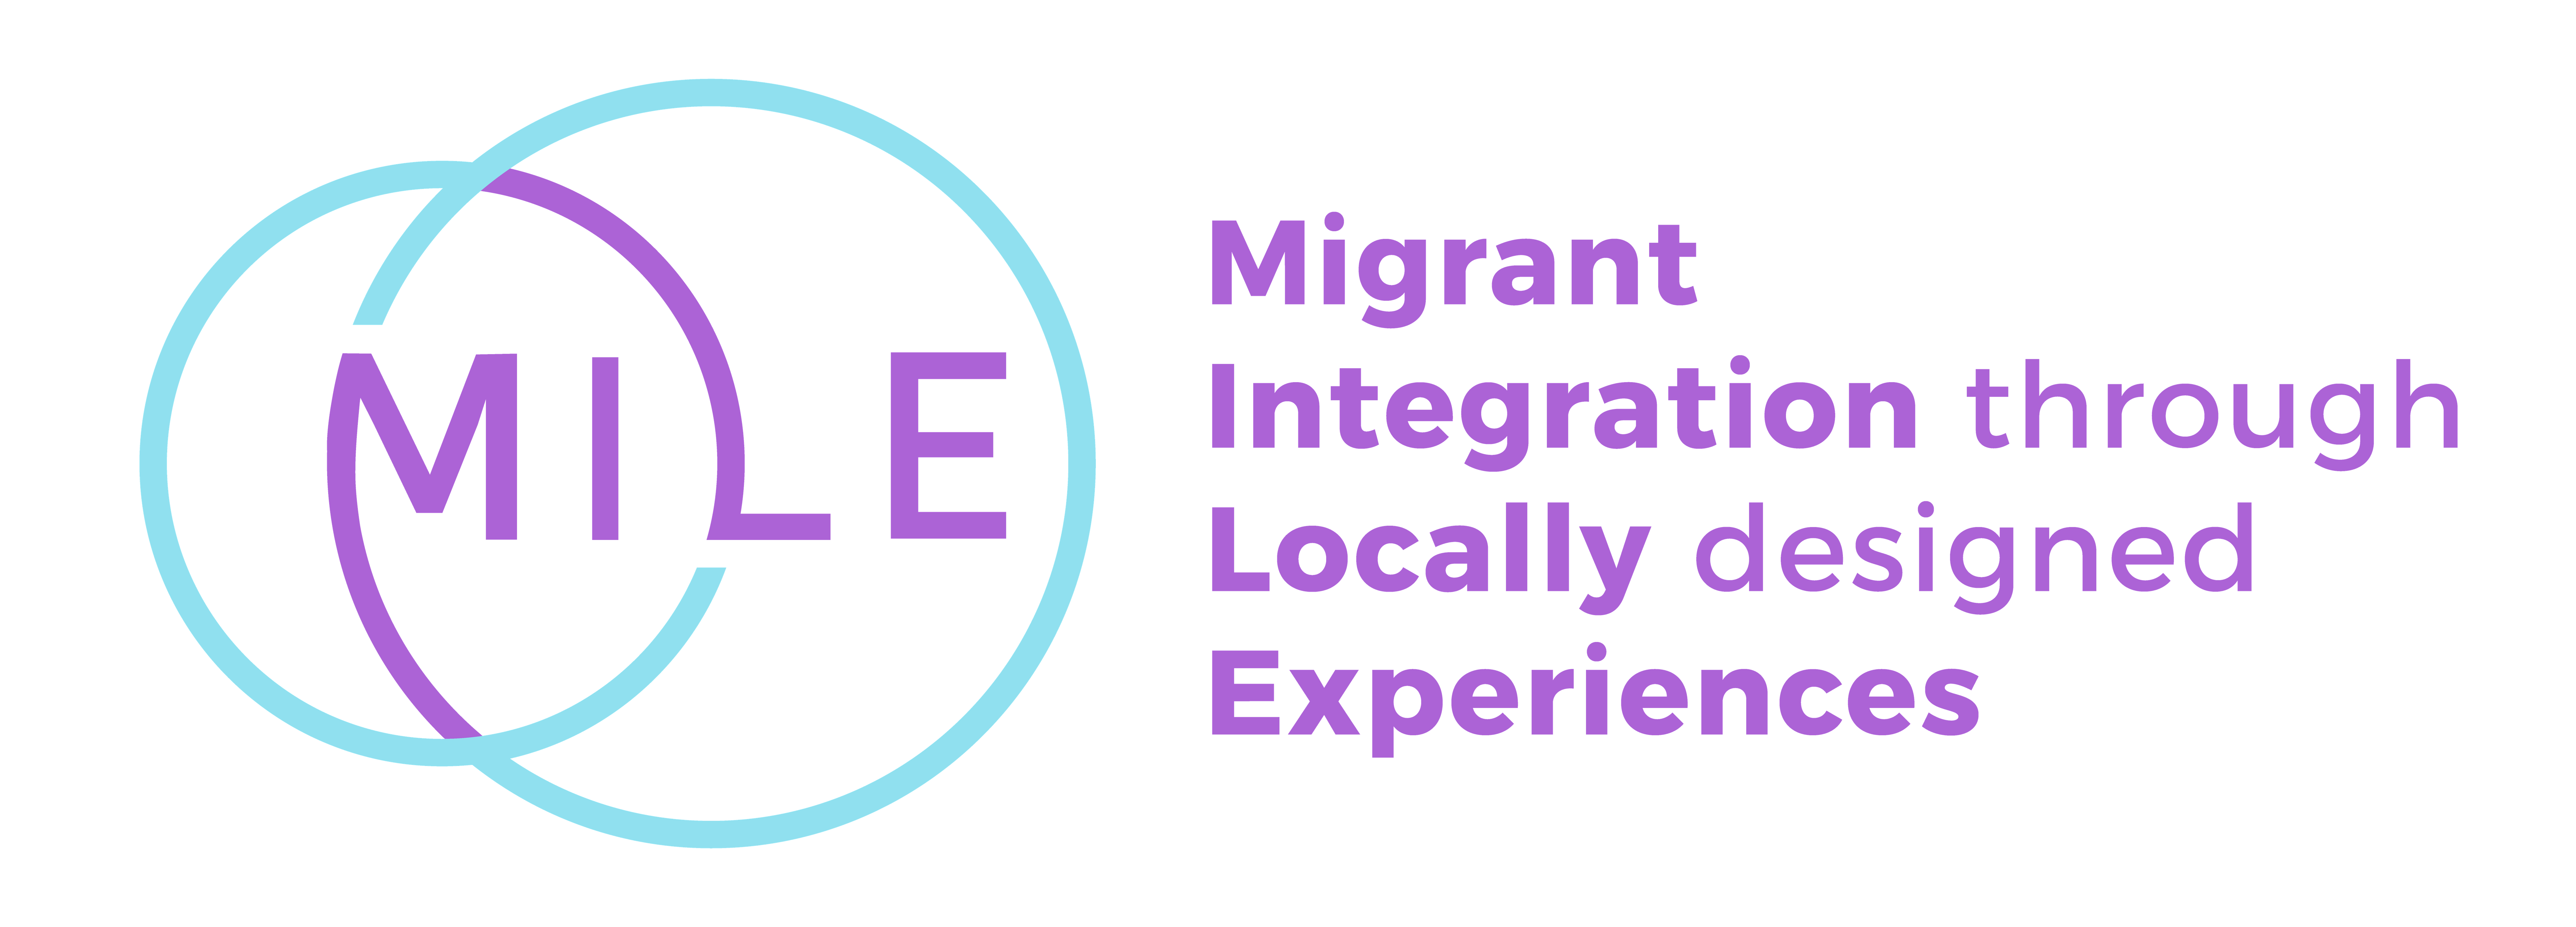 Migrant Integration through Locally designed Experiences